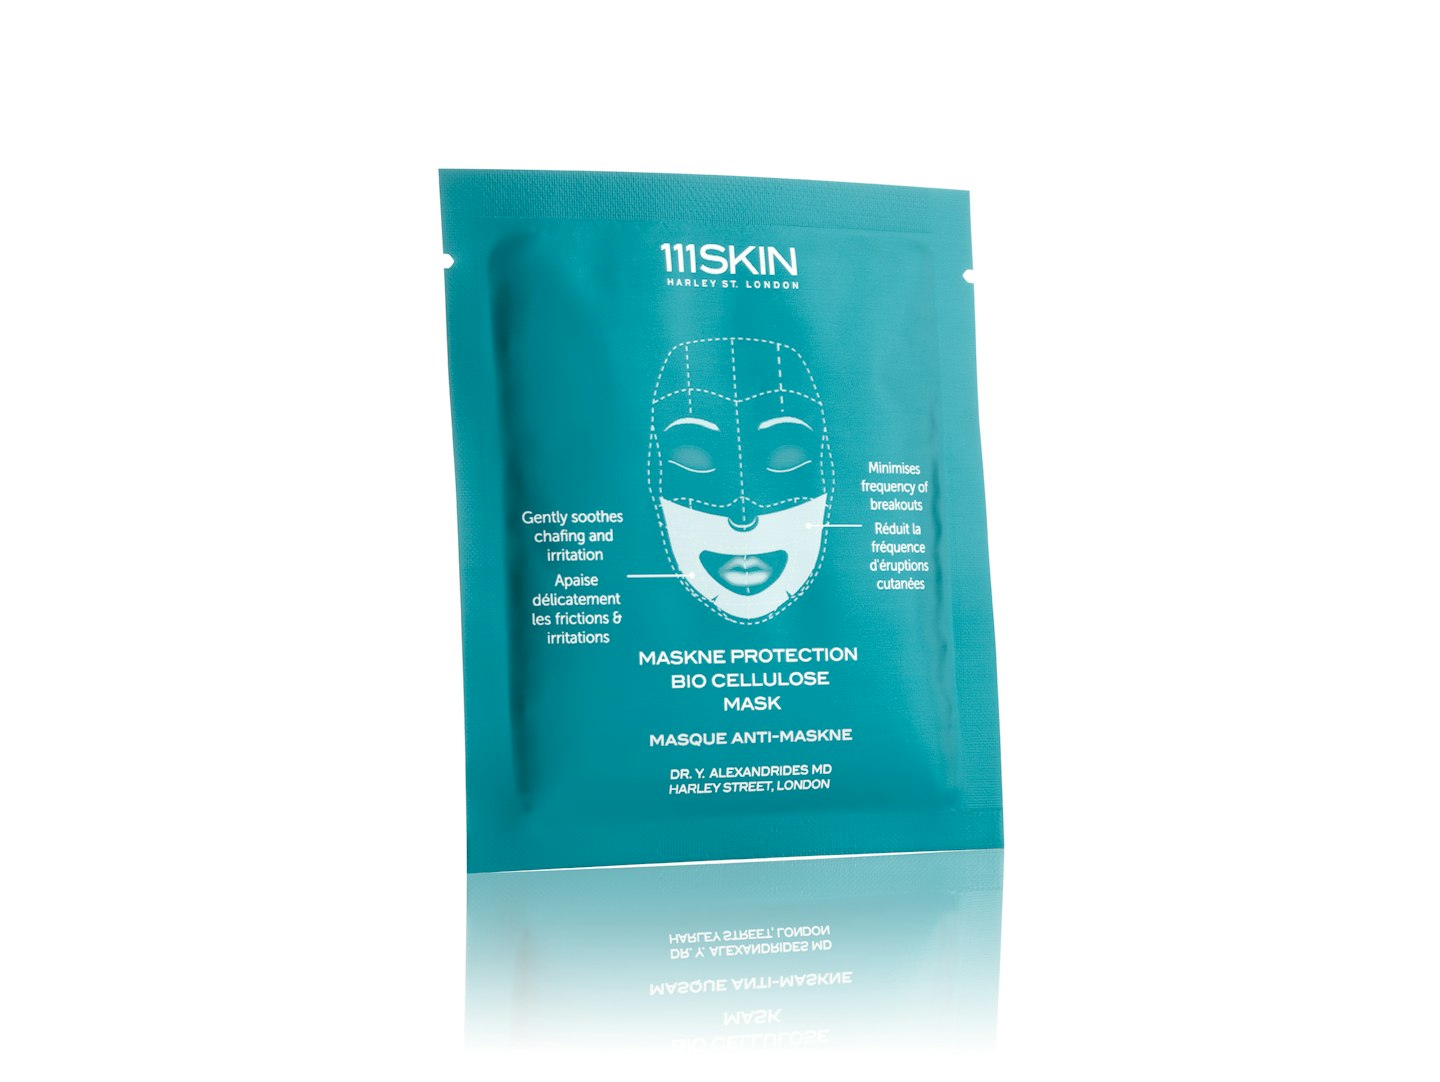 111Skin Maskne Protection Bio Cellulose Mask